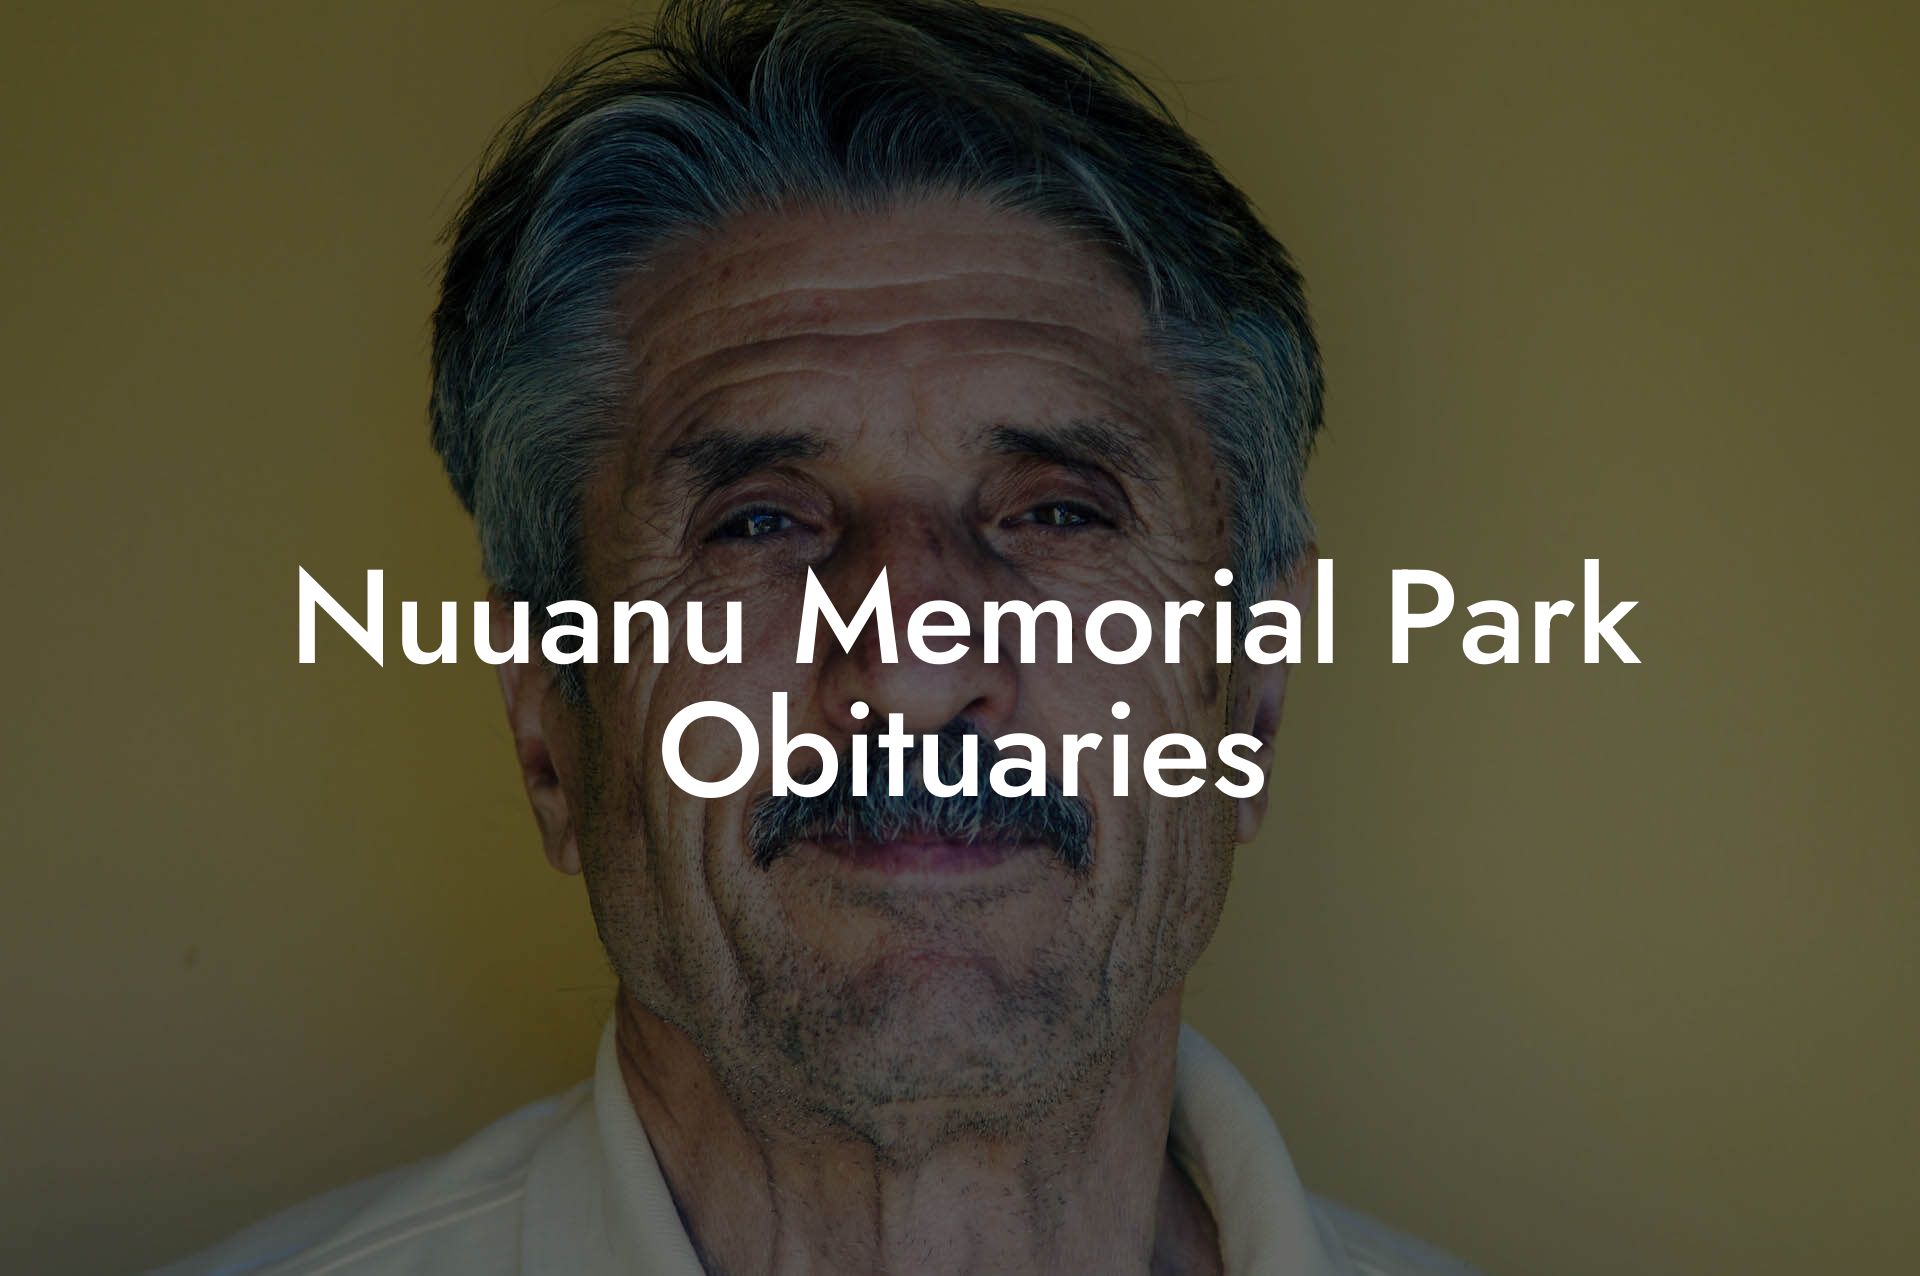 Nuuanu Memorial Park Obituaries